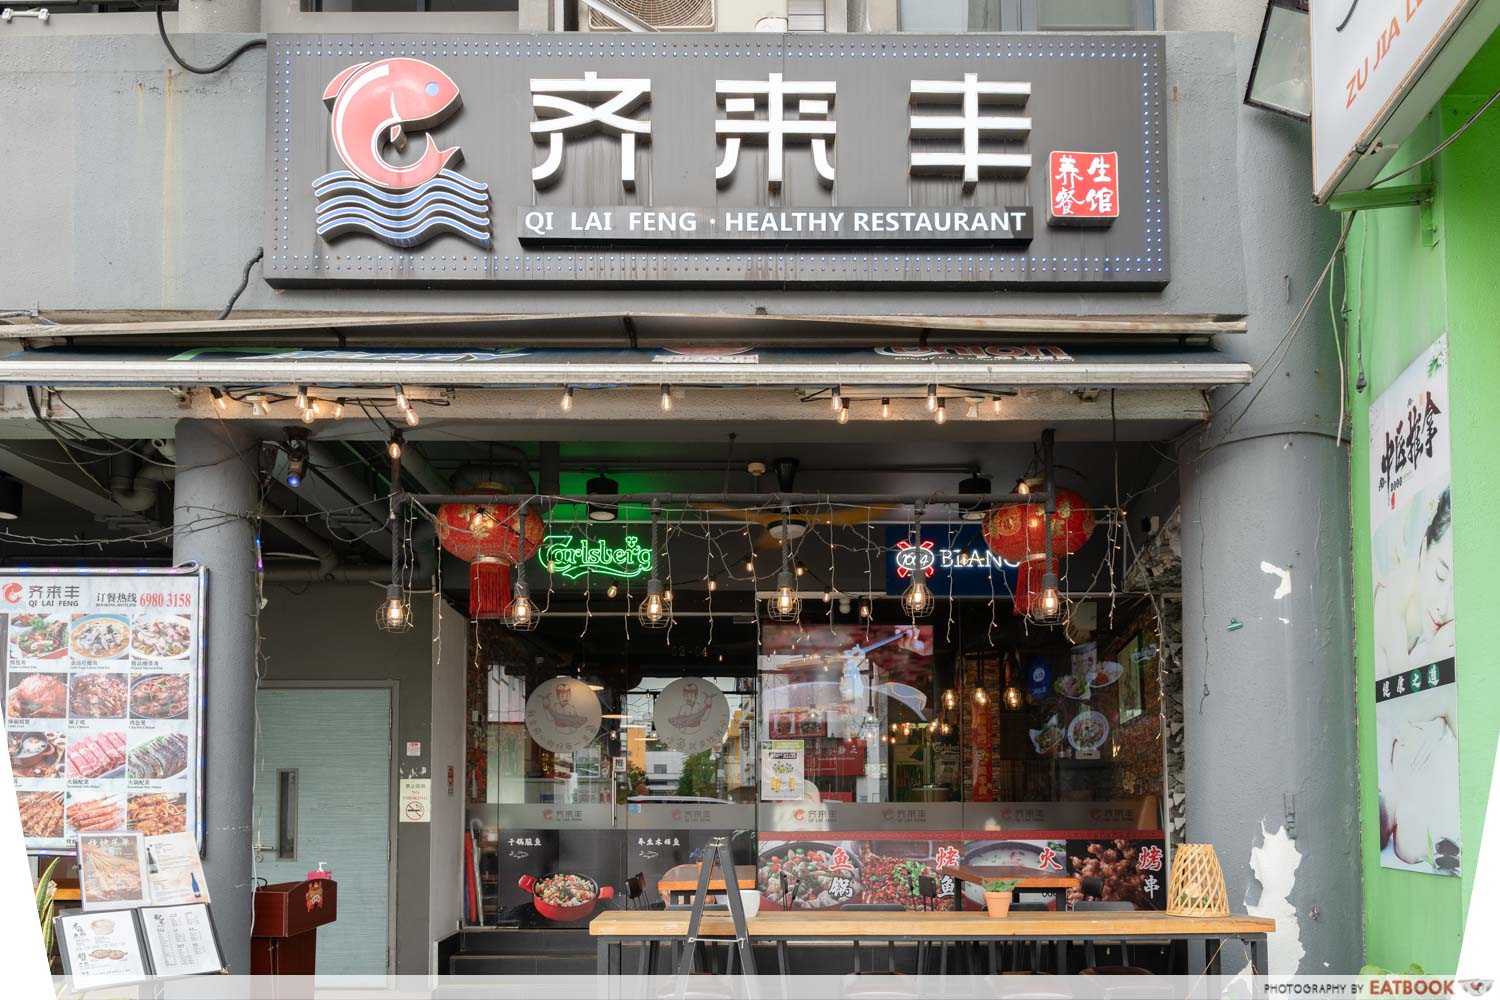 qi-lai-feng-storefront